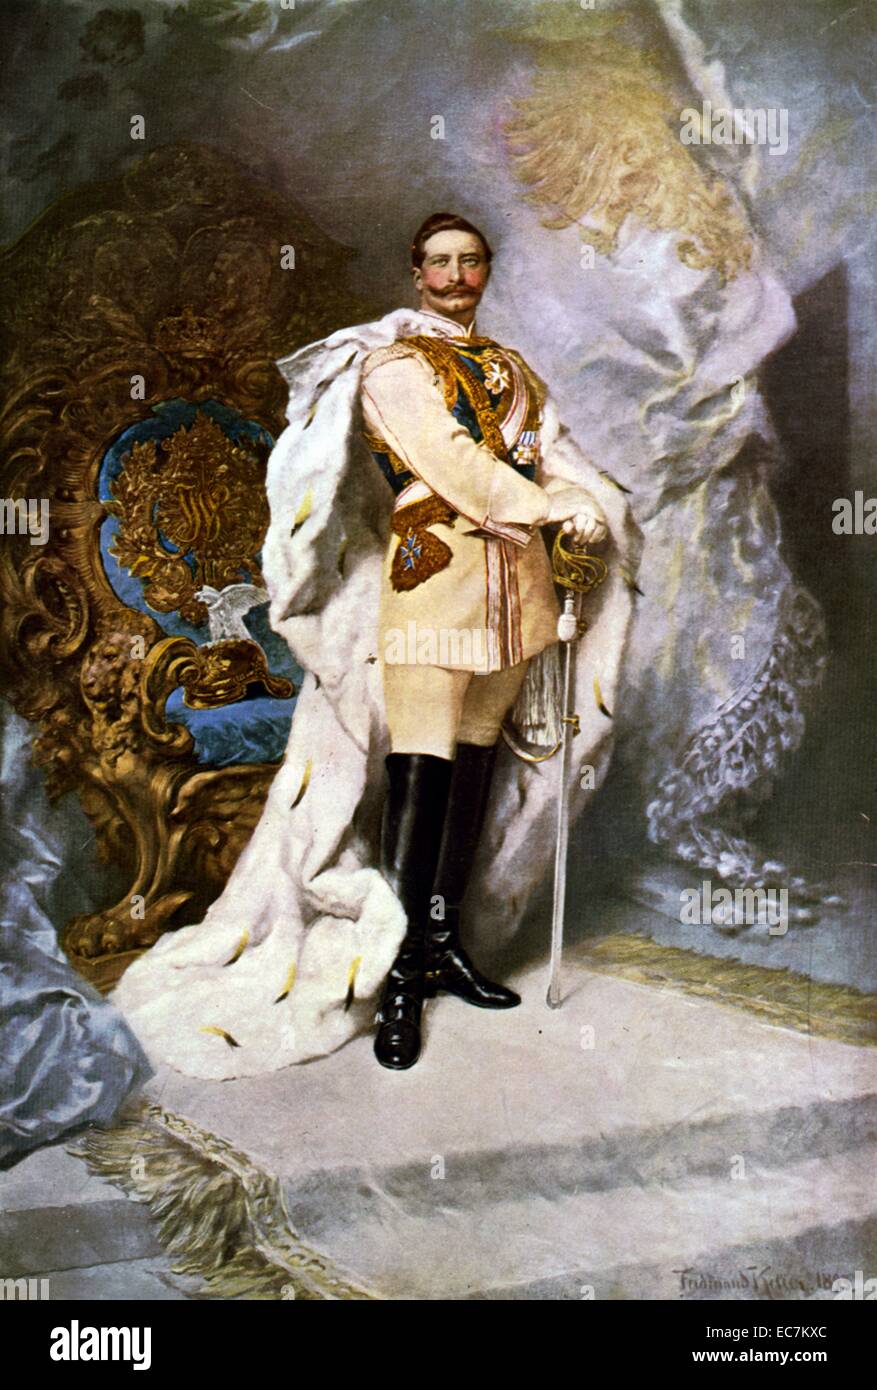 Wilhelm II by Ferdinand Keller (1842-1922). Wilhelm II was the last German Emperor (Kaiser) and King of Prussia. Stock Photo